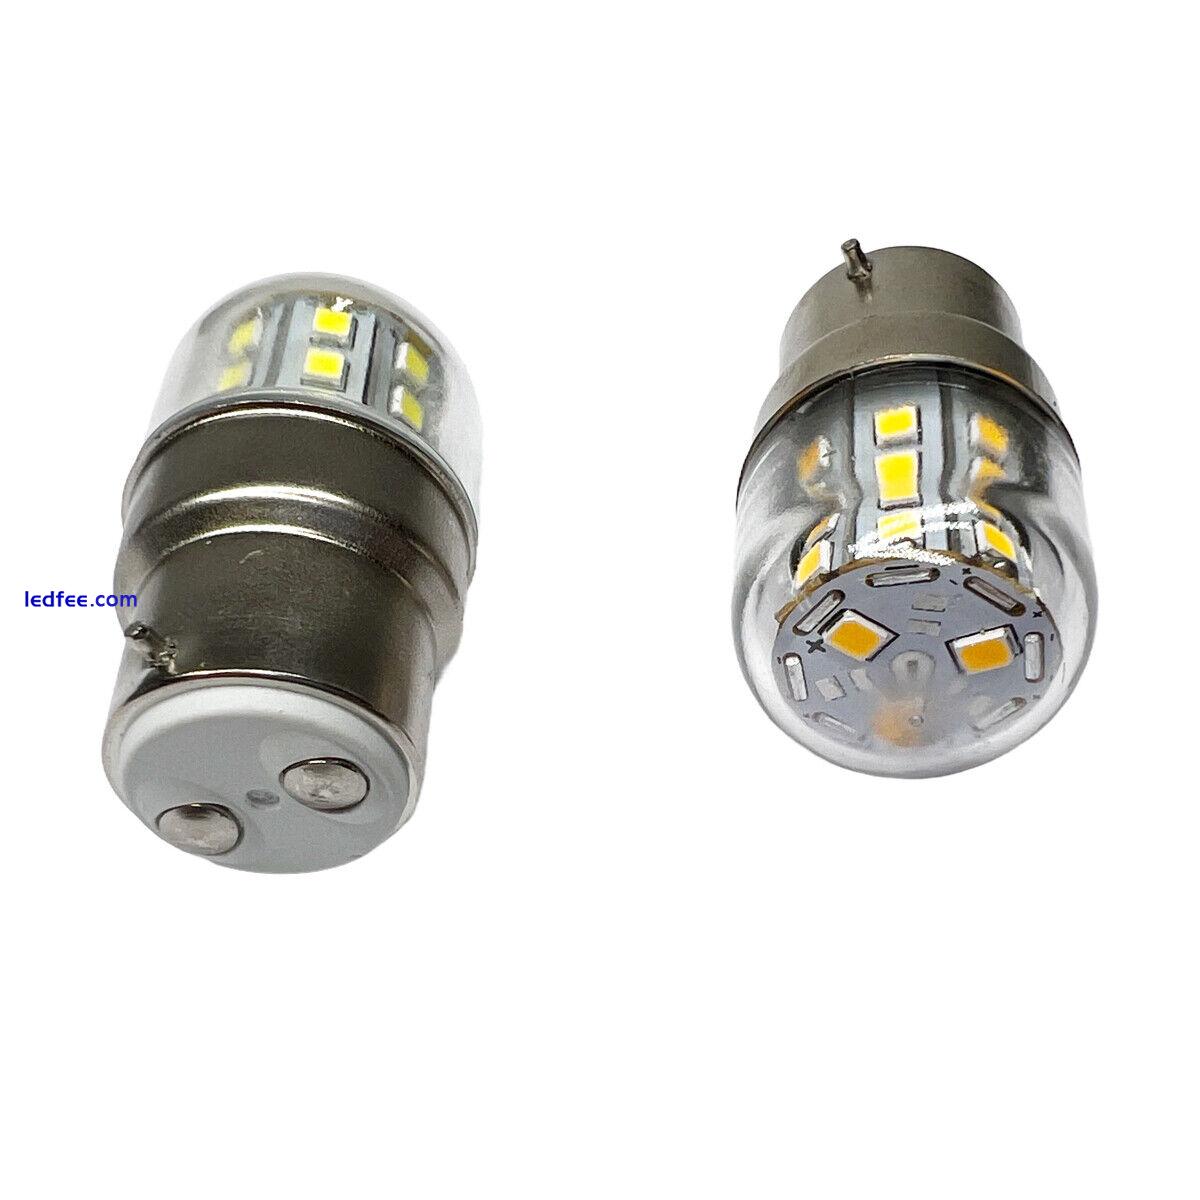 Mini B22 LED Corn Light Bulbs 4W T26 2835 SMD Lamp Refrigerator Kitchen Decor BC 4 